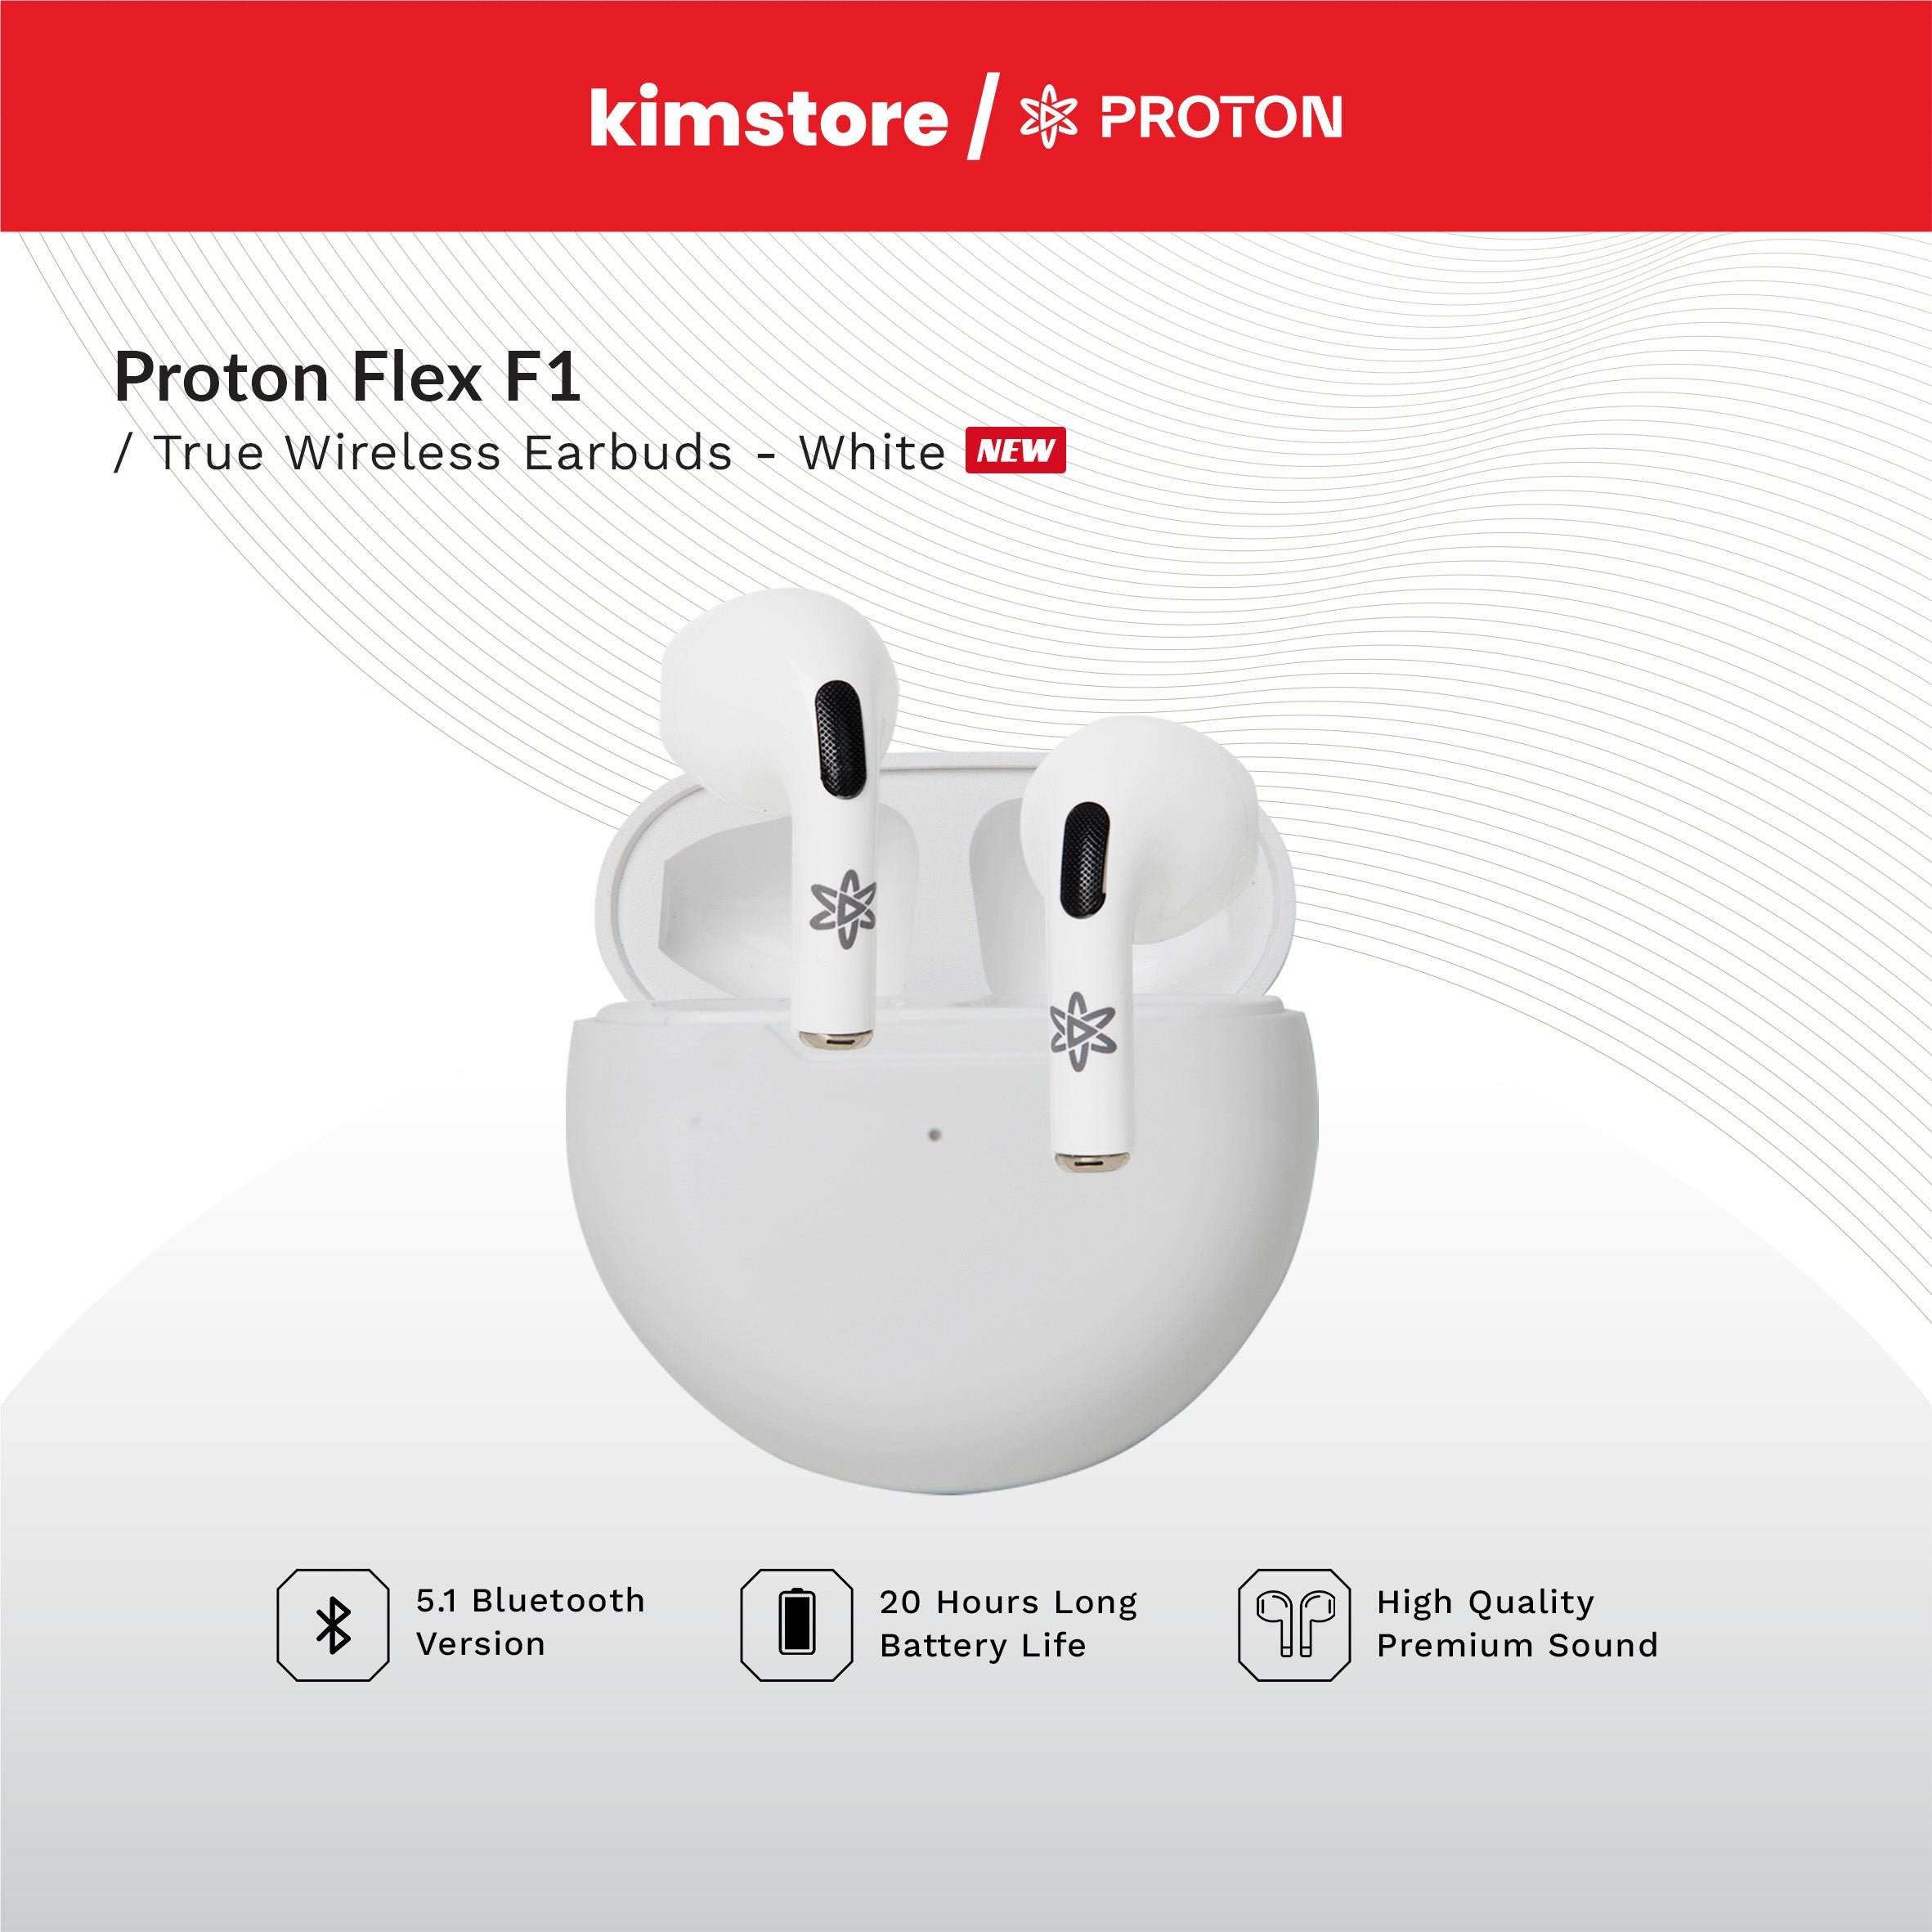 Proton Flex F1 True Wireless Earbuds